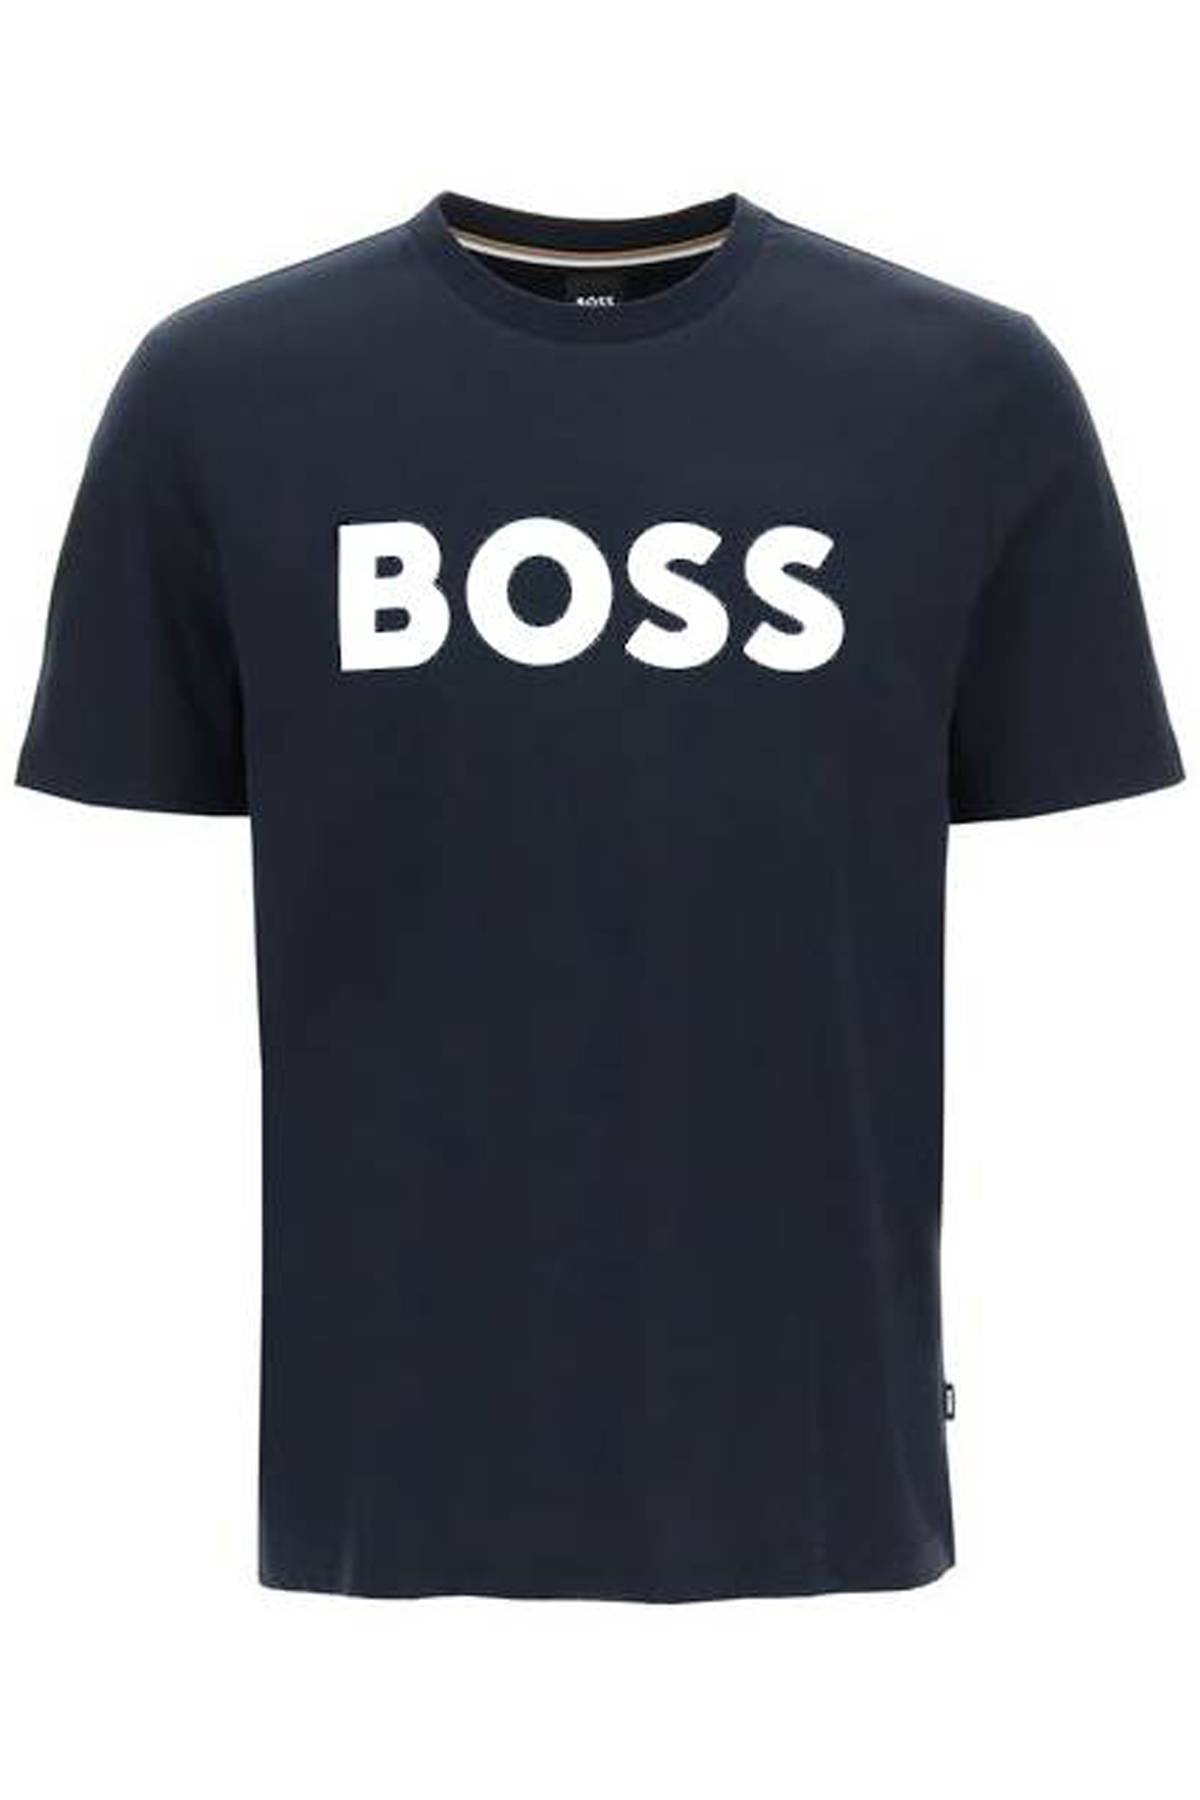 BOSS BOSS tiburt 354 logo print t-shirt